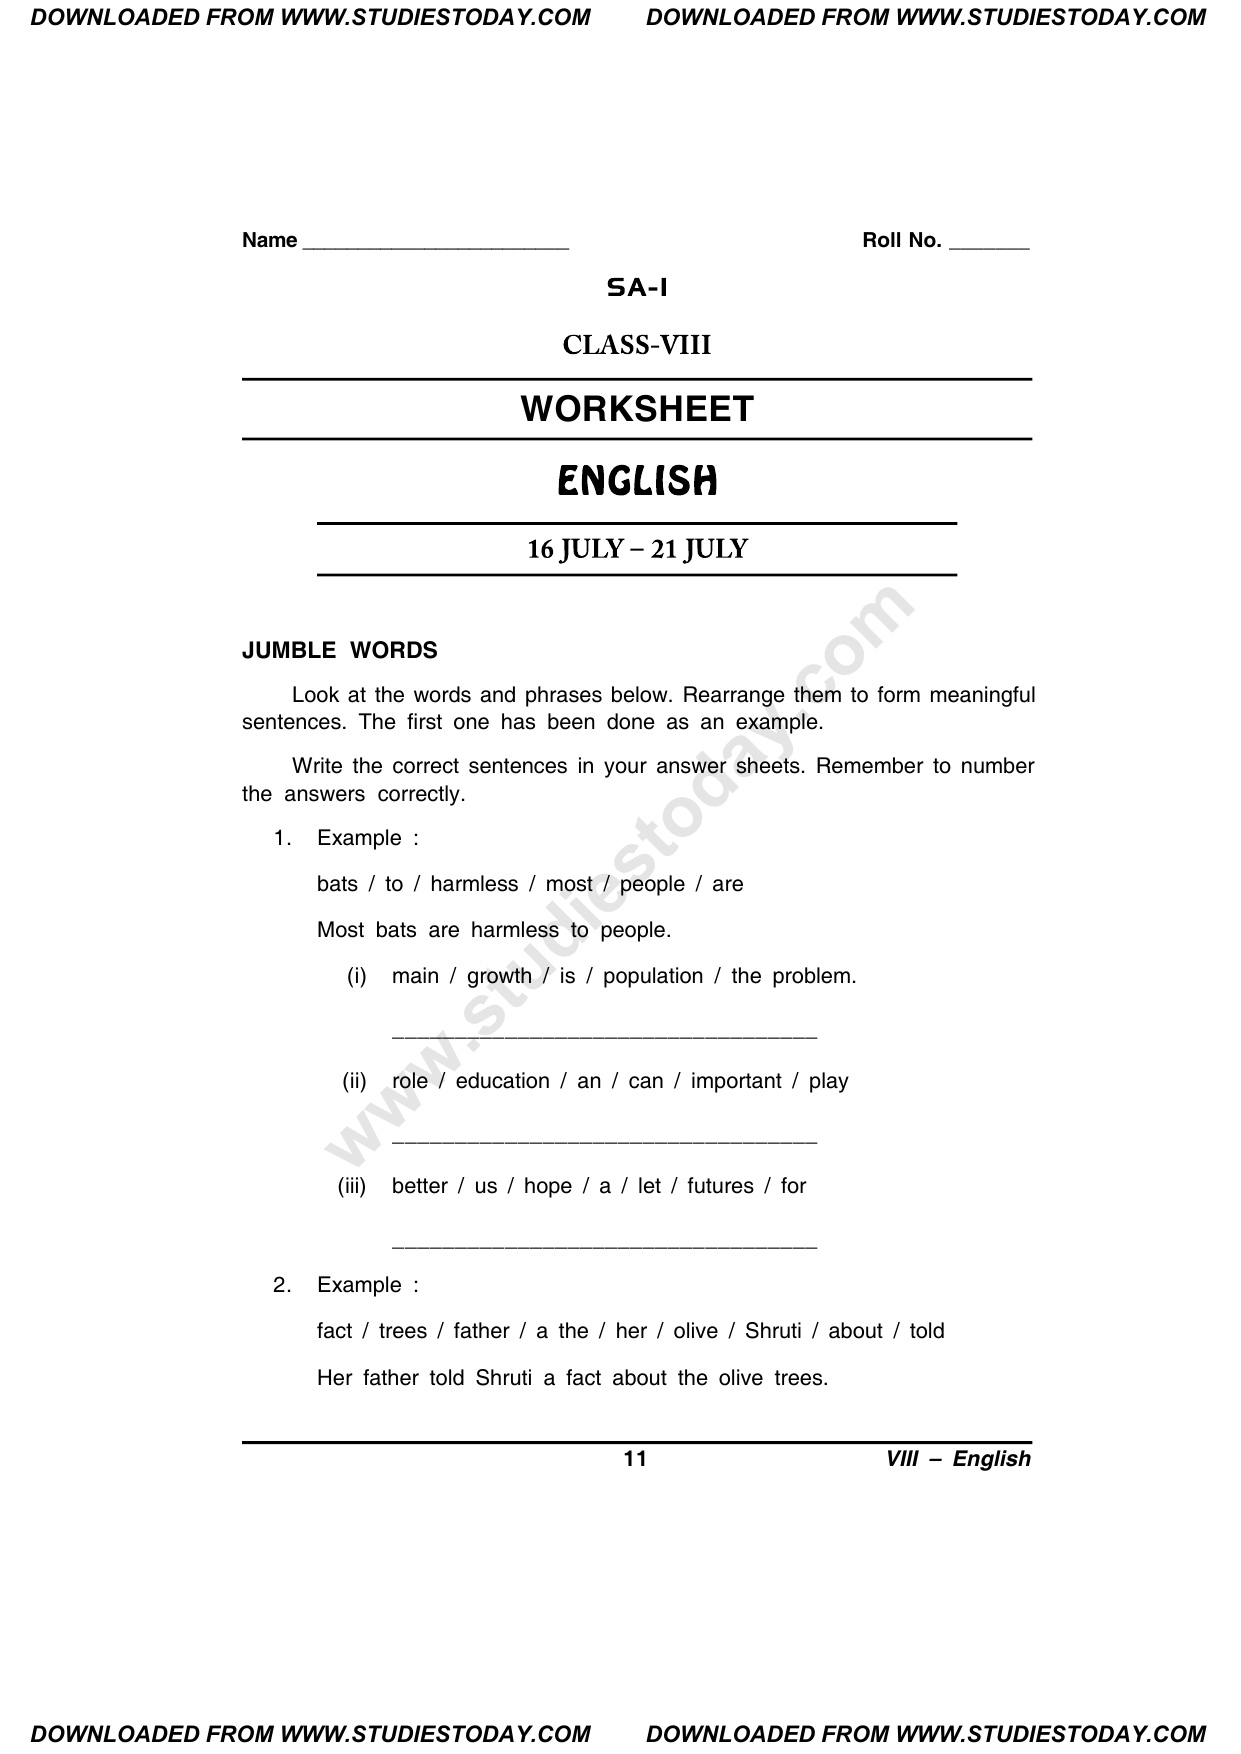 8th class english homework